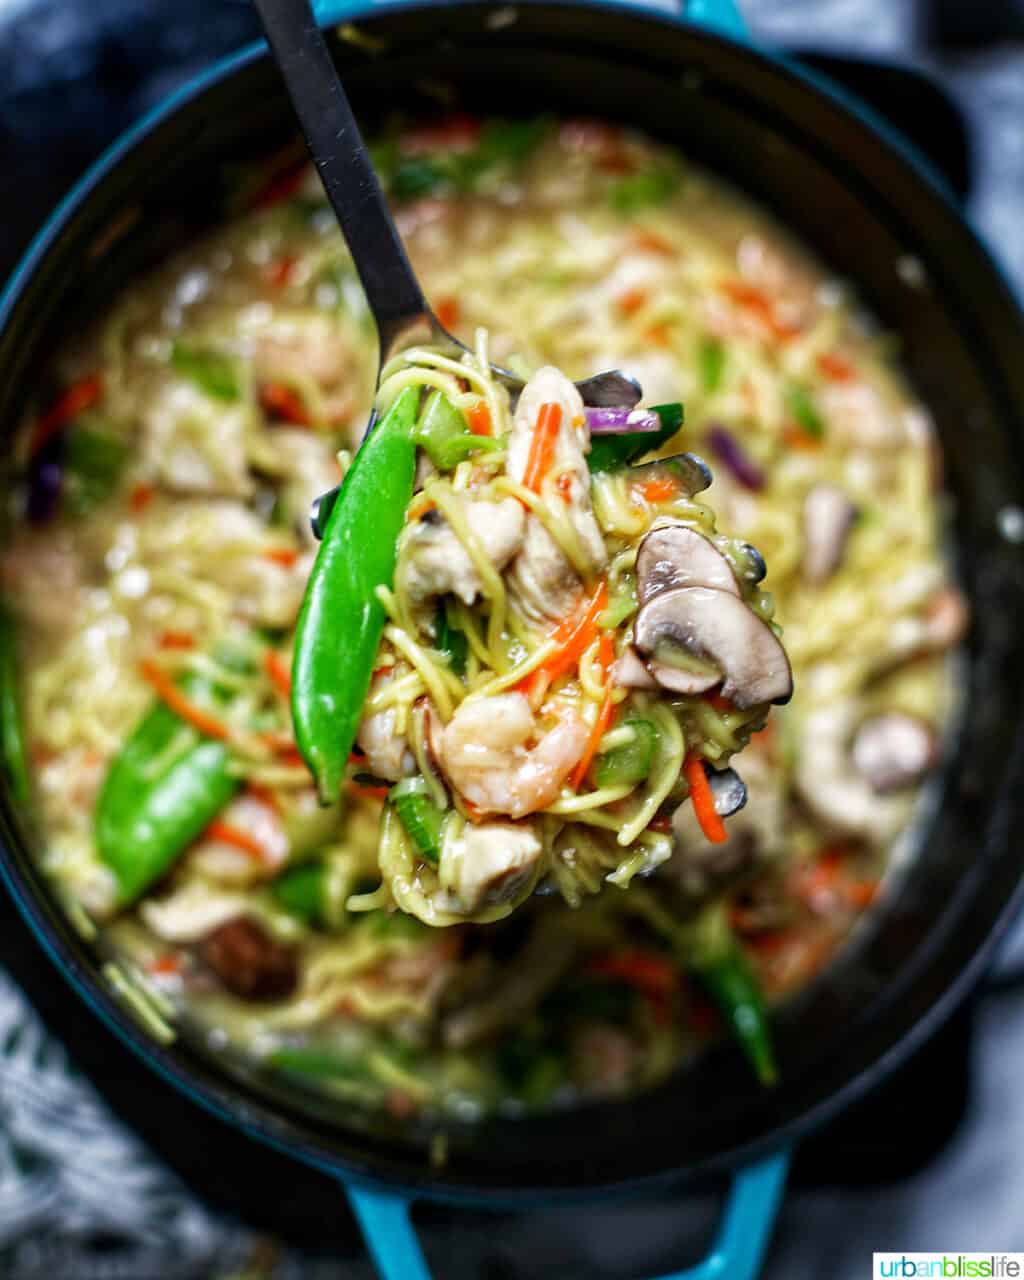 spoon full of adding shrimp to Filipino pancit canton noodles